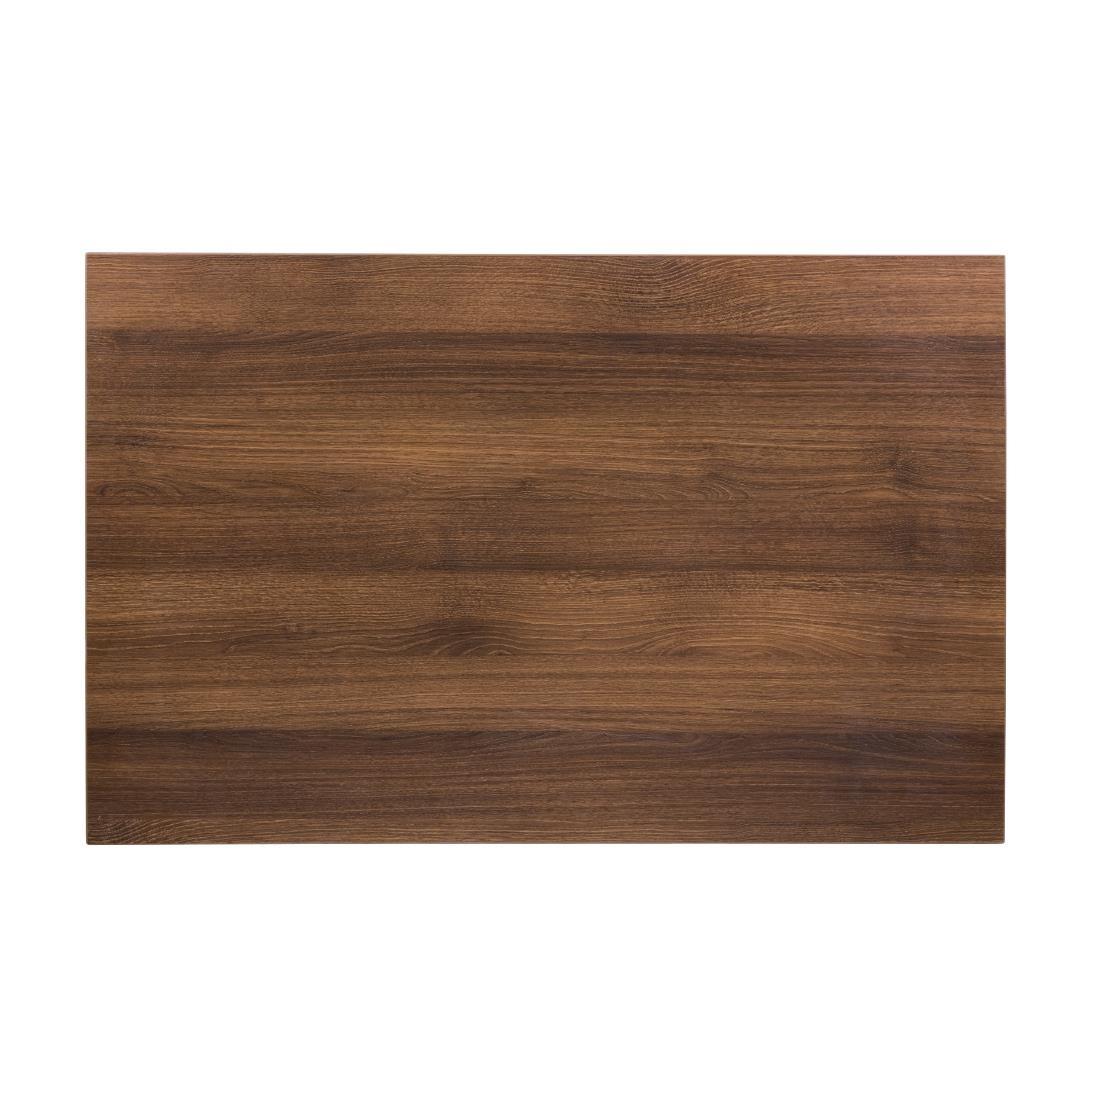 Bolero Pre-drilled Rectangular Table Top Rustic Oak 1100(W) x 700(D)mm - DT442  - 2